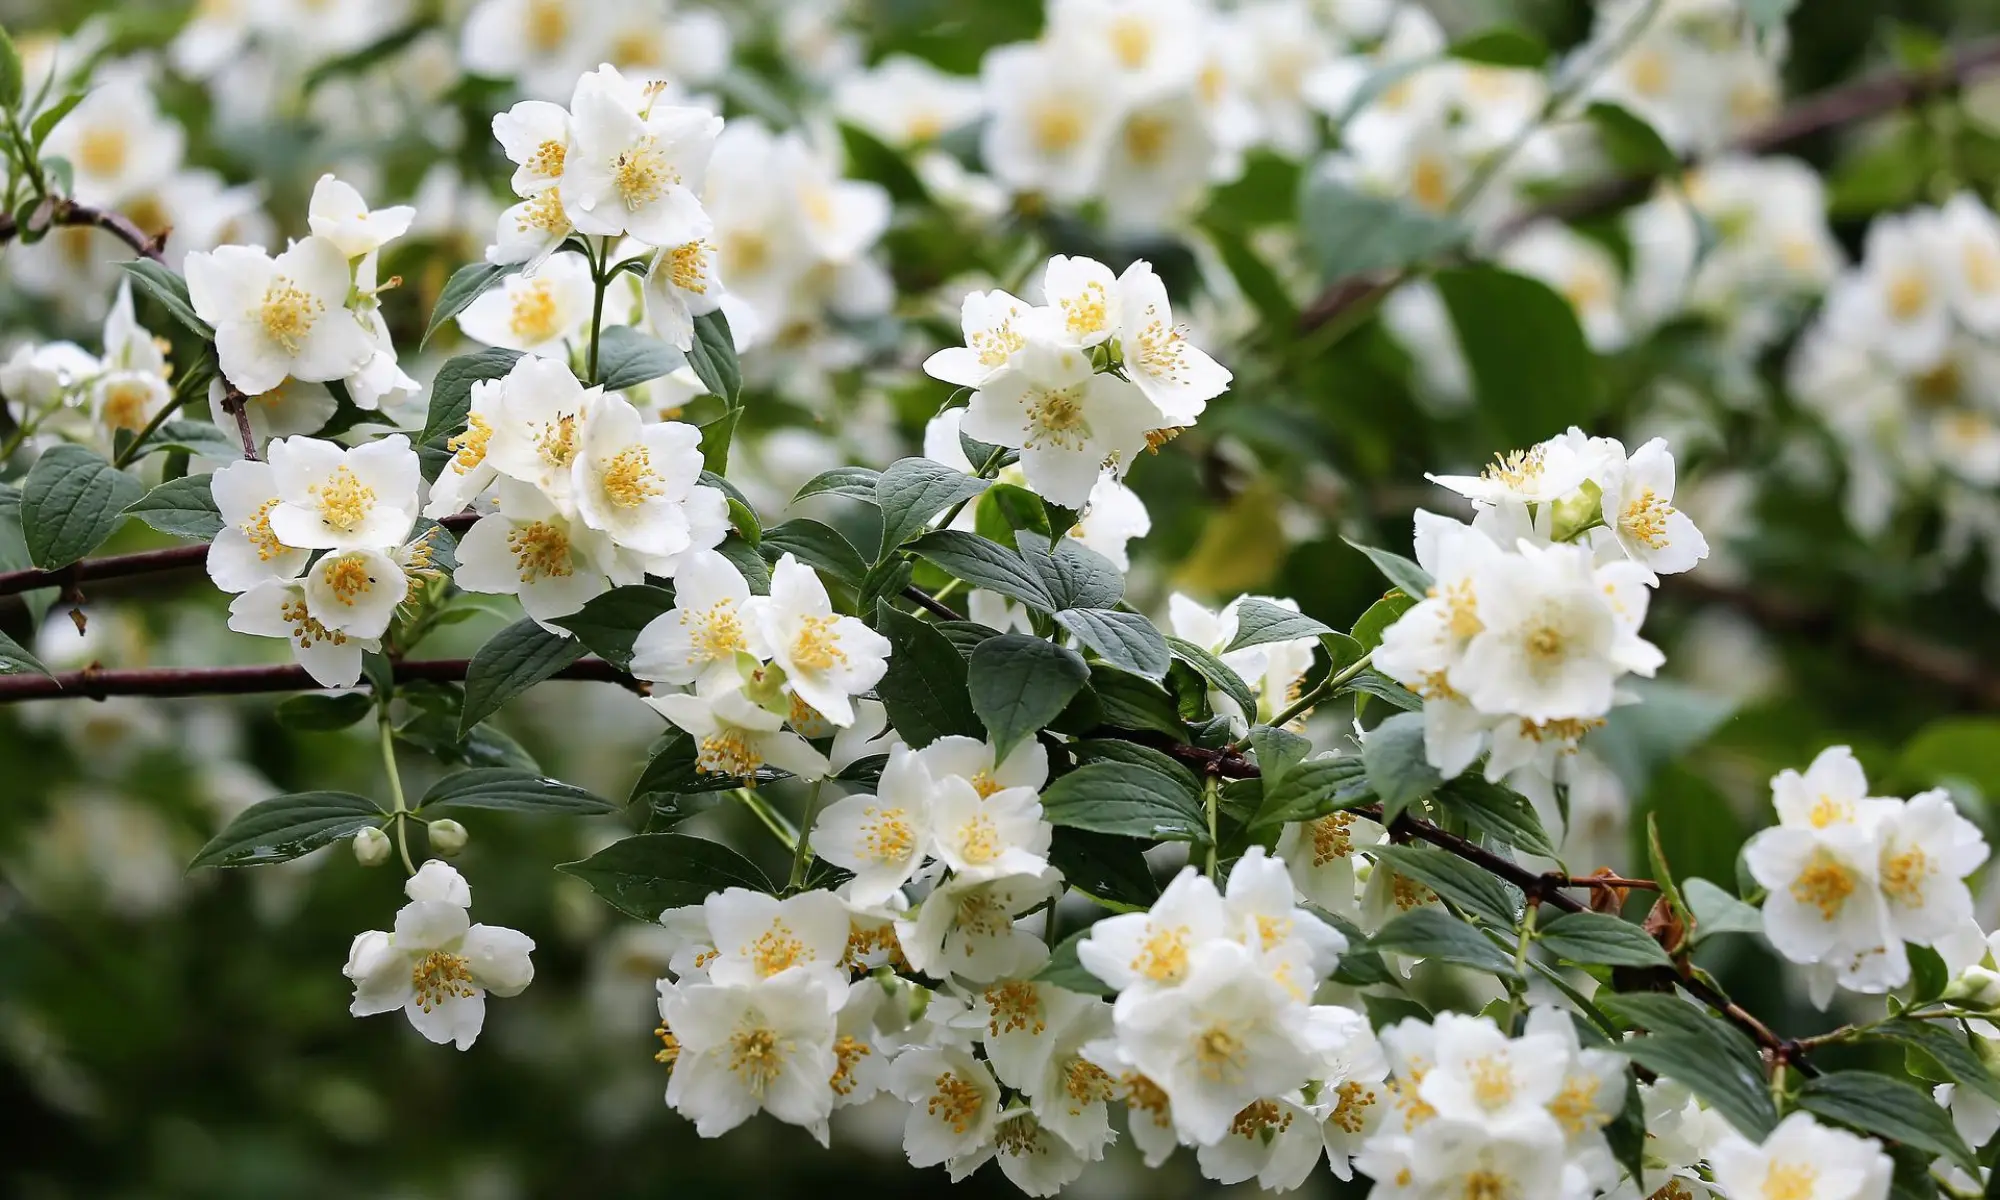 White jasmine flowers on a branch.